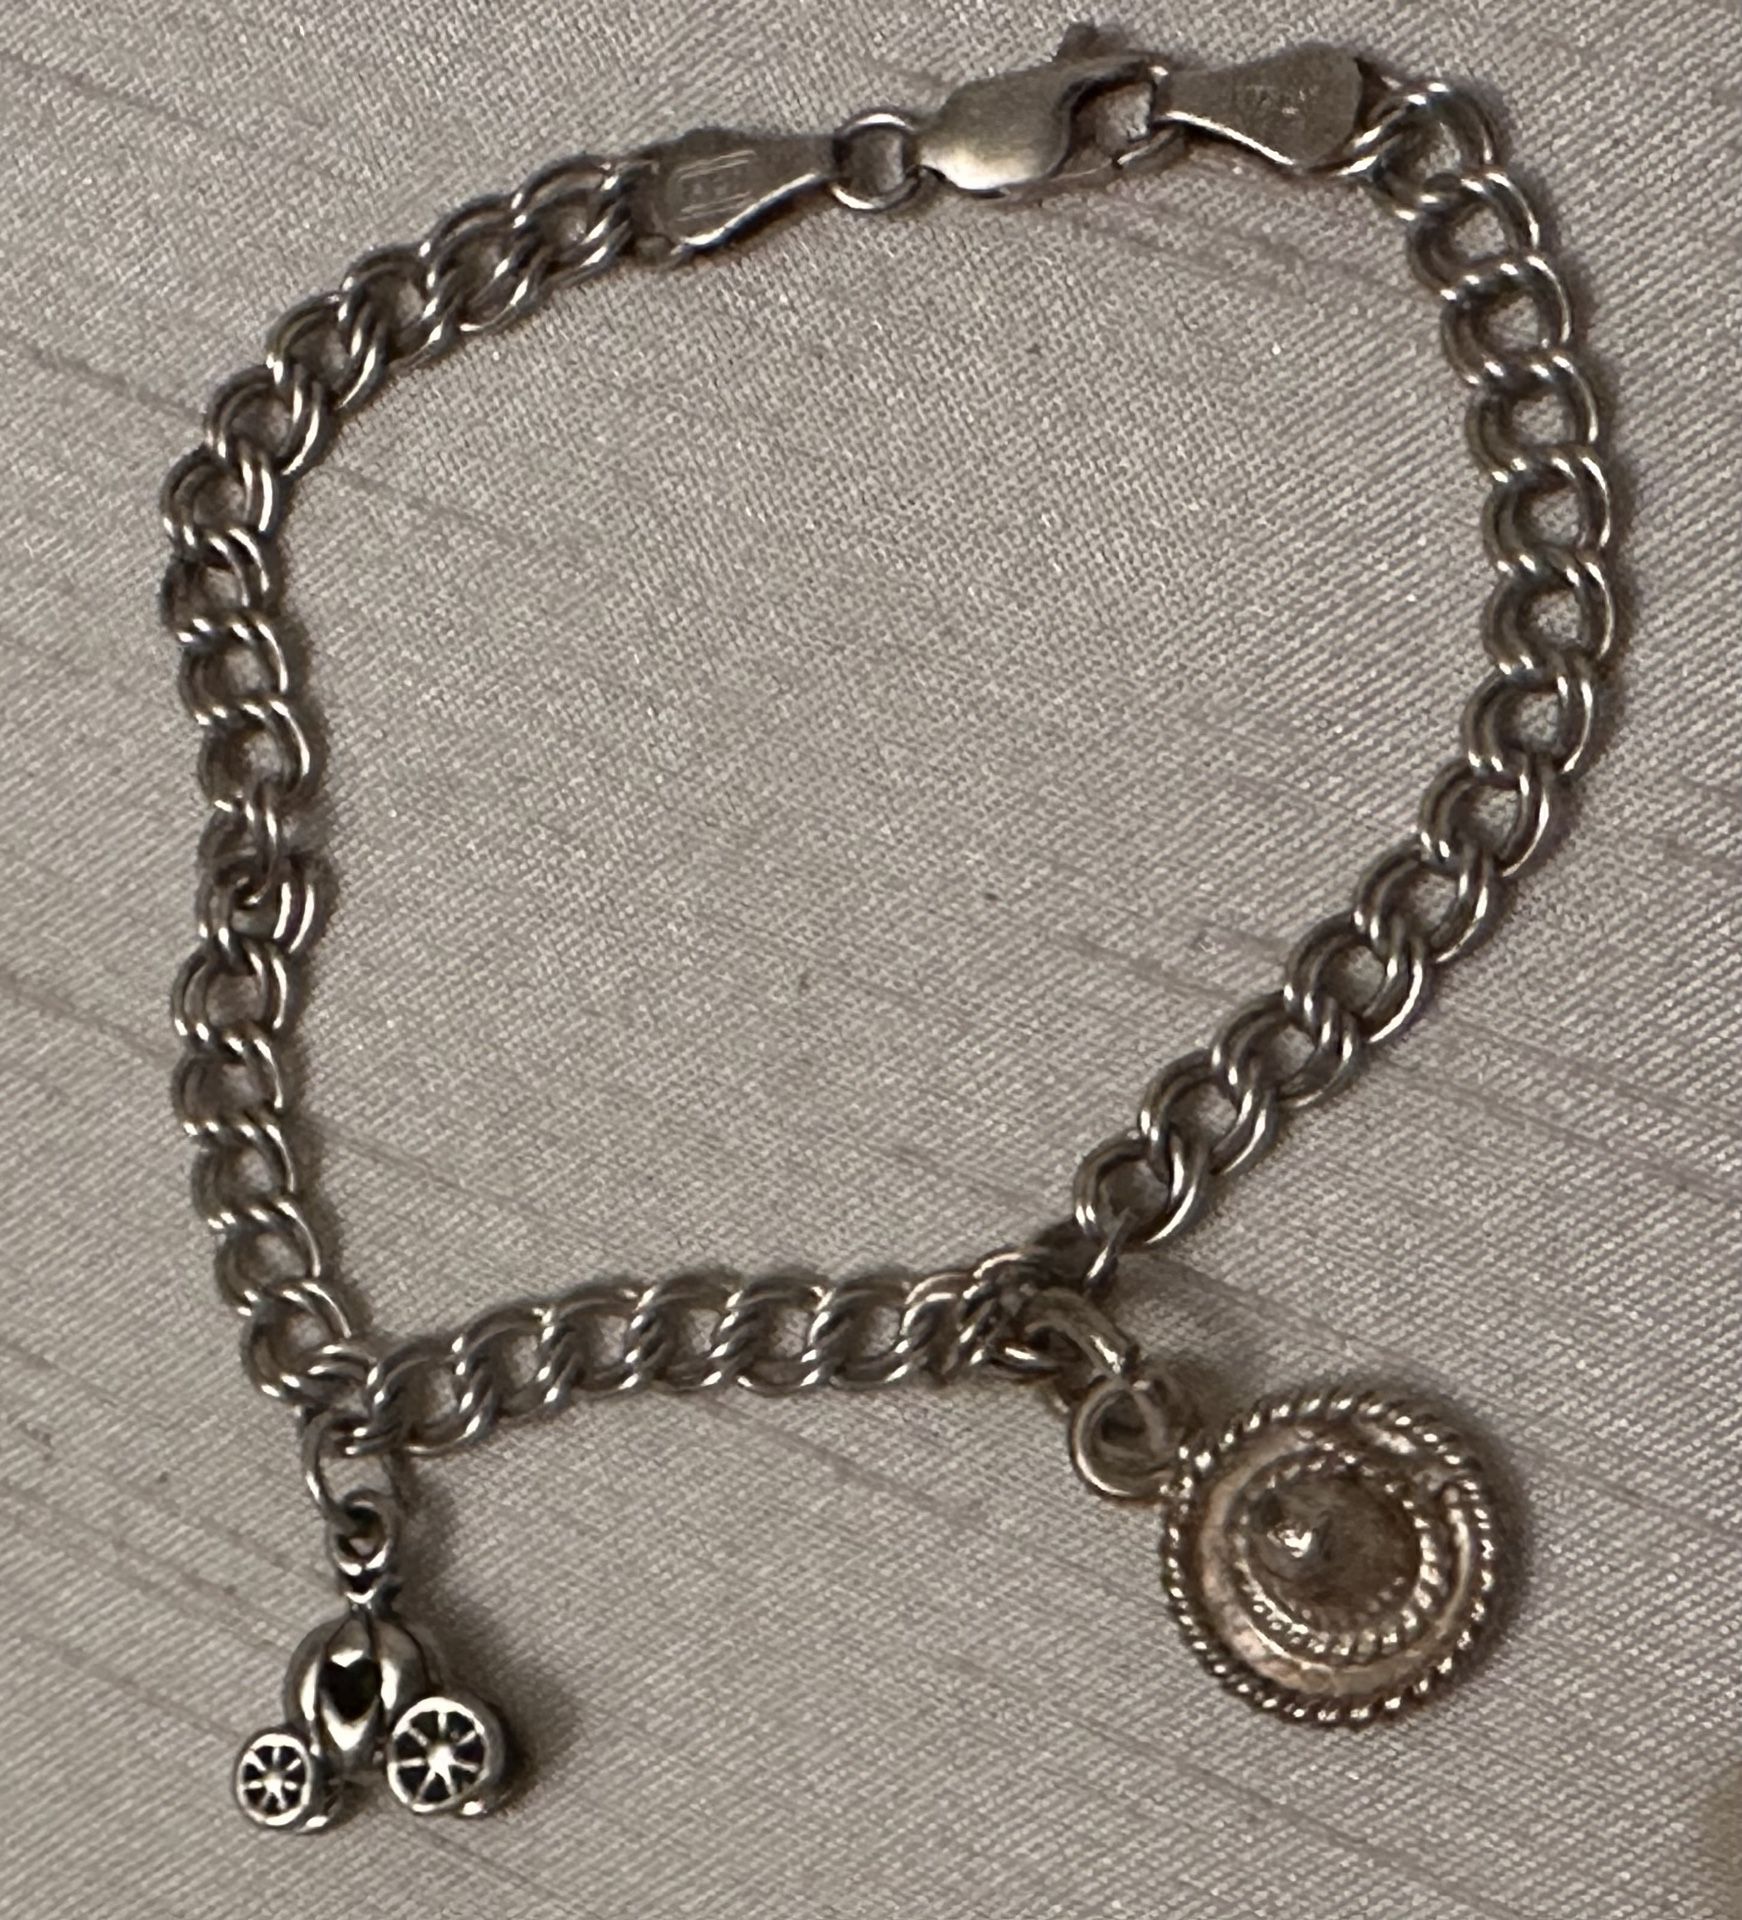 Sterling Silver Charm Bracelet 